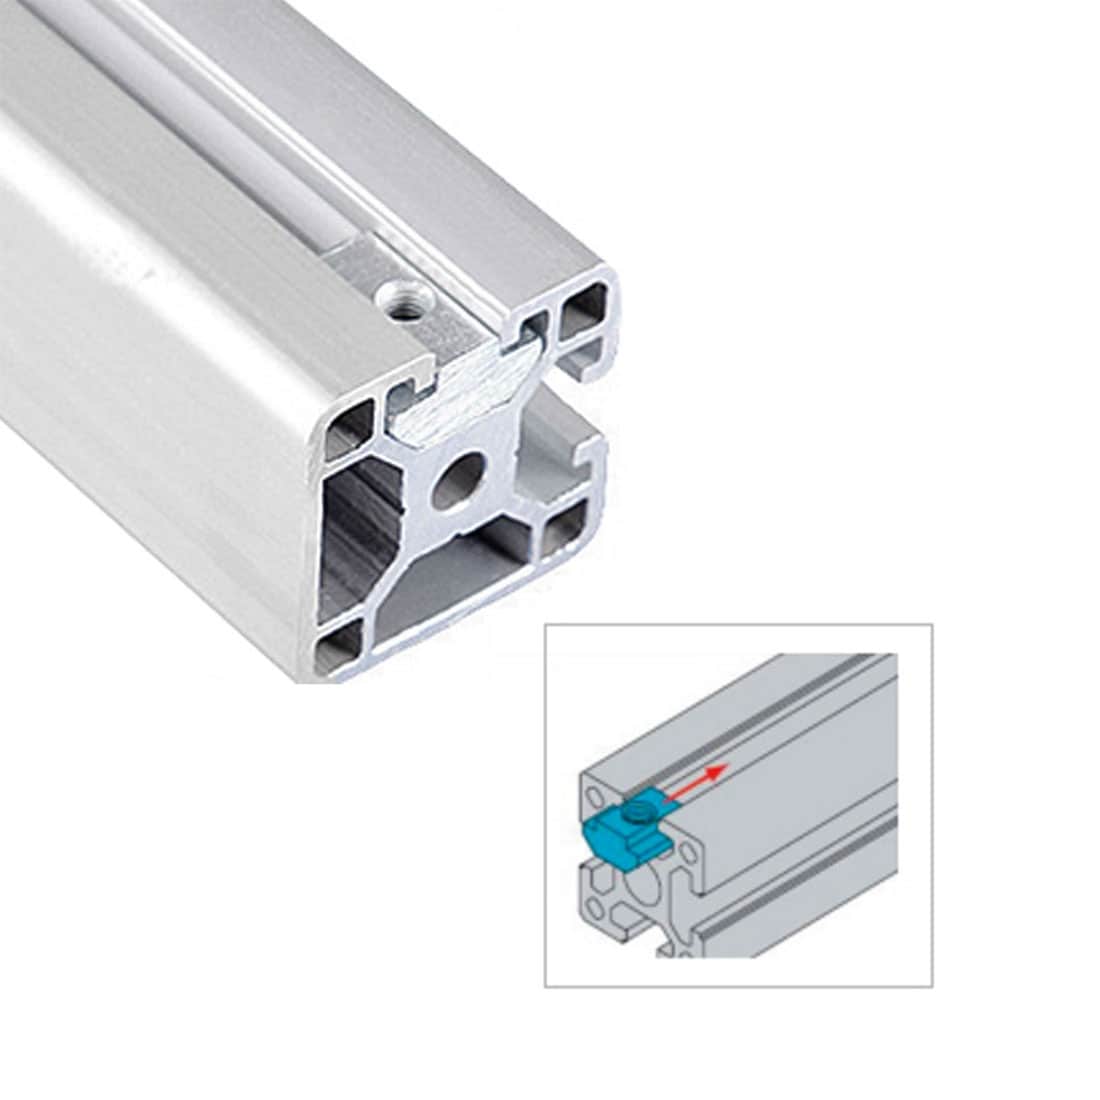 M3 Slide in T-Nut for 2020 Series Aluminum Extrusions Profile 4 Pcs - 20 Series-M3,4 pcs